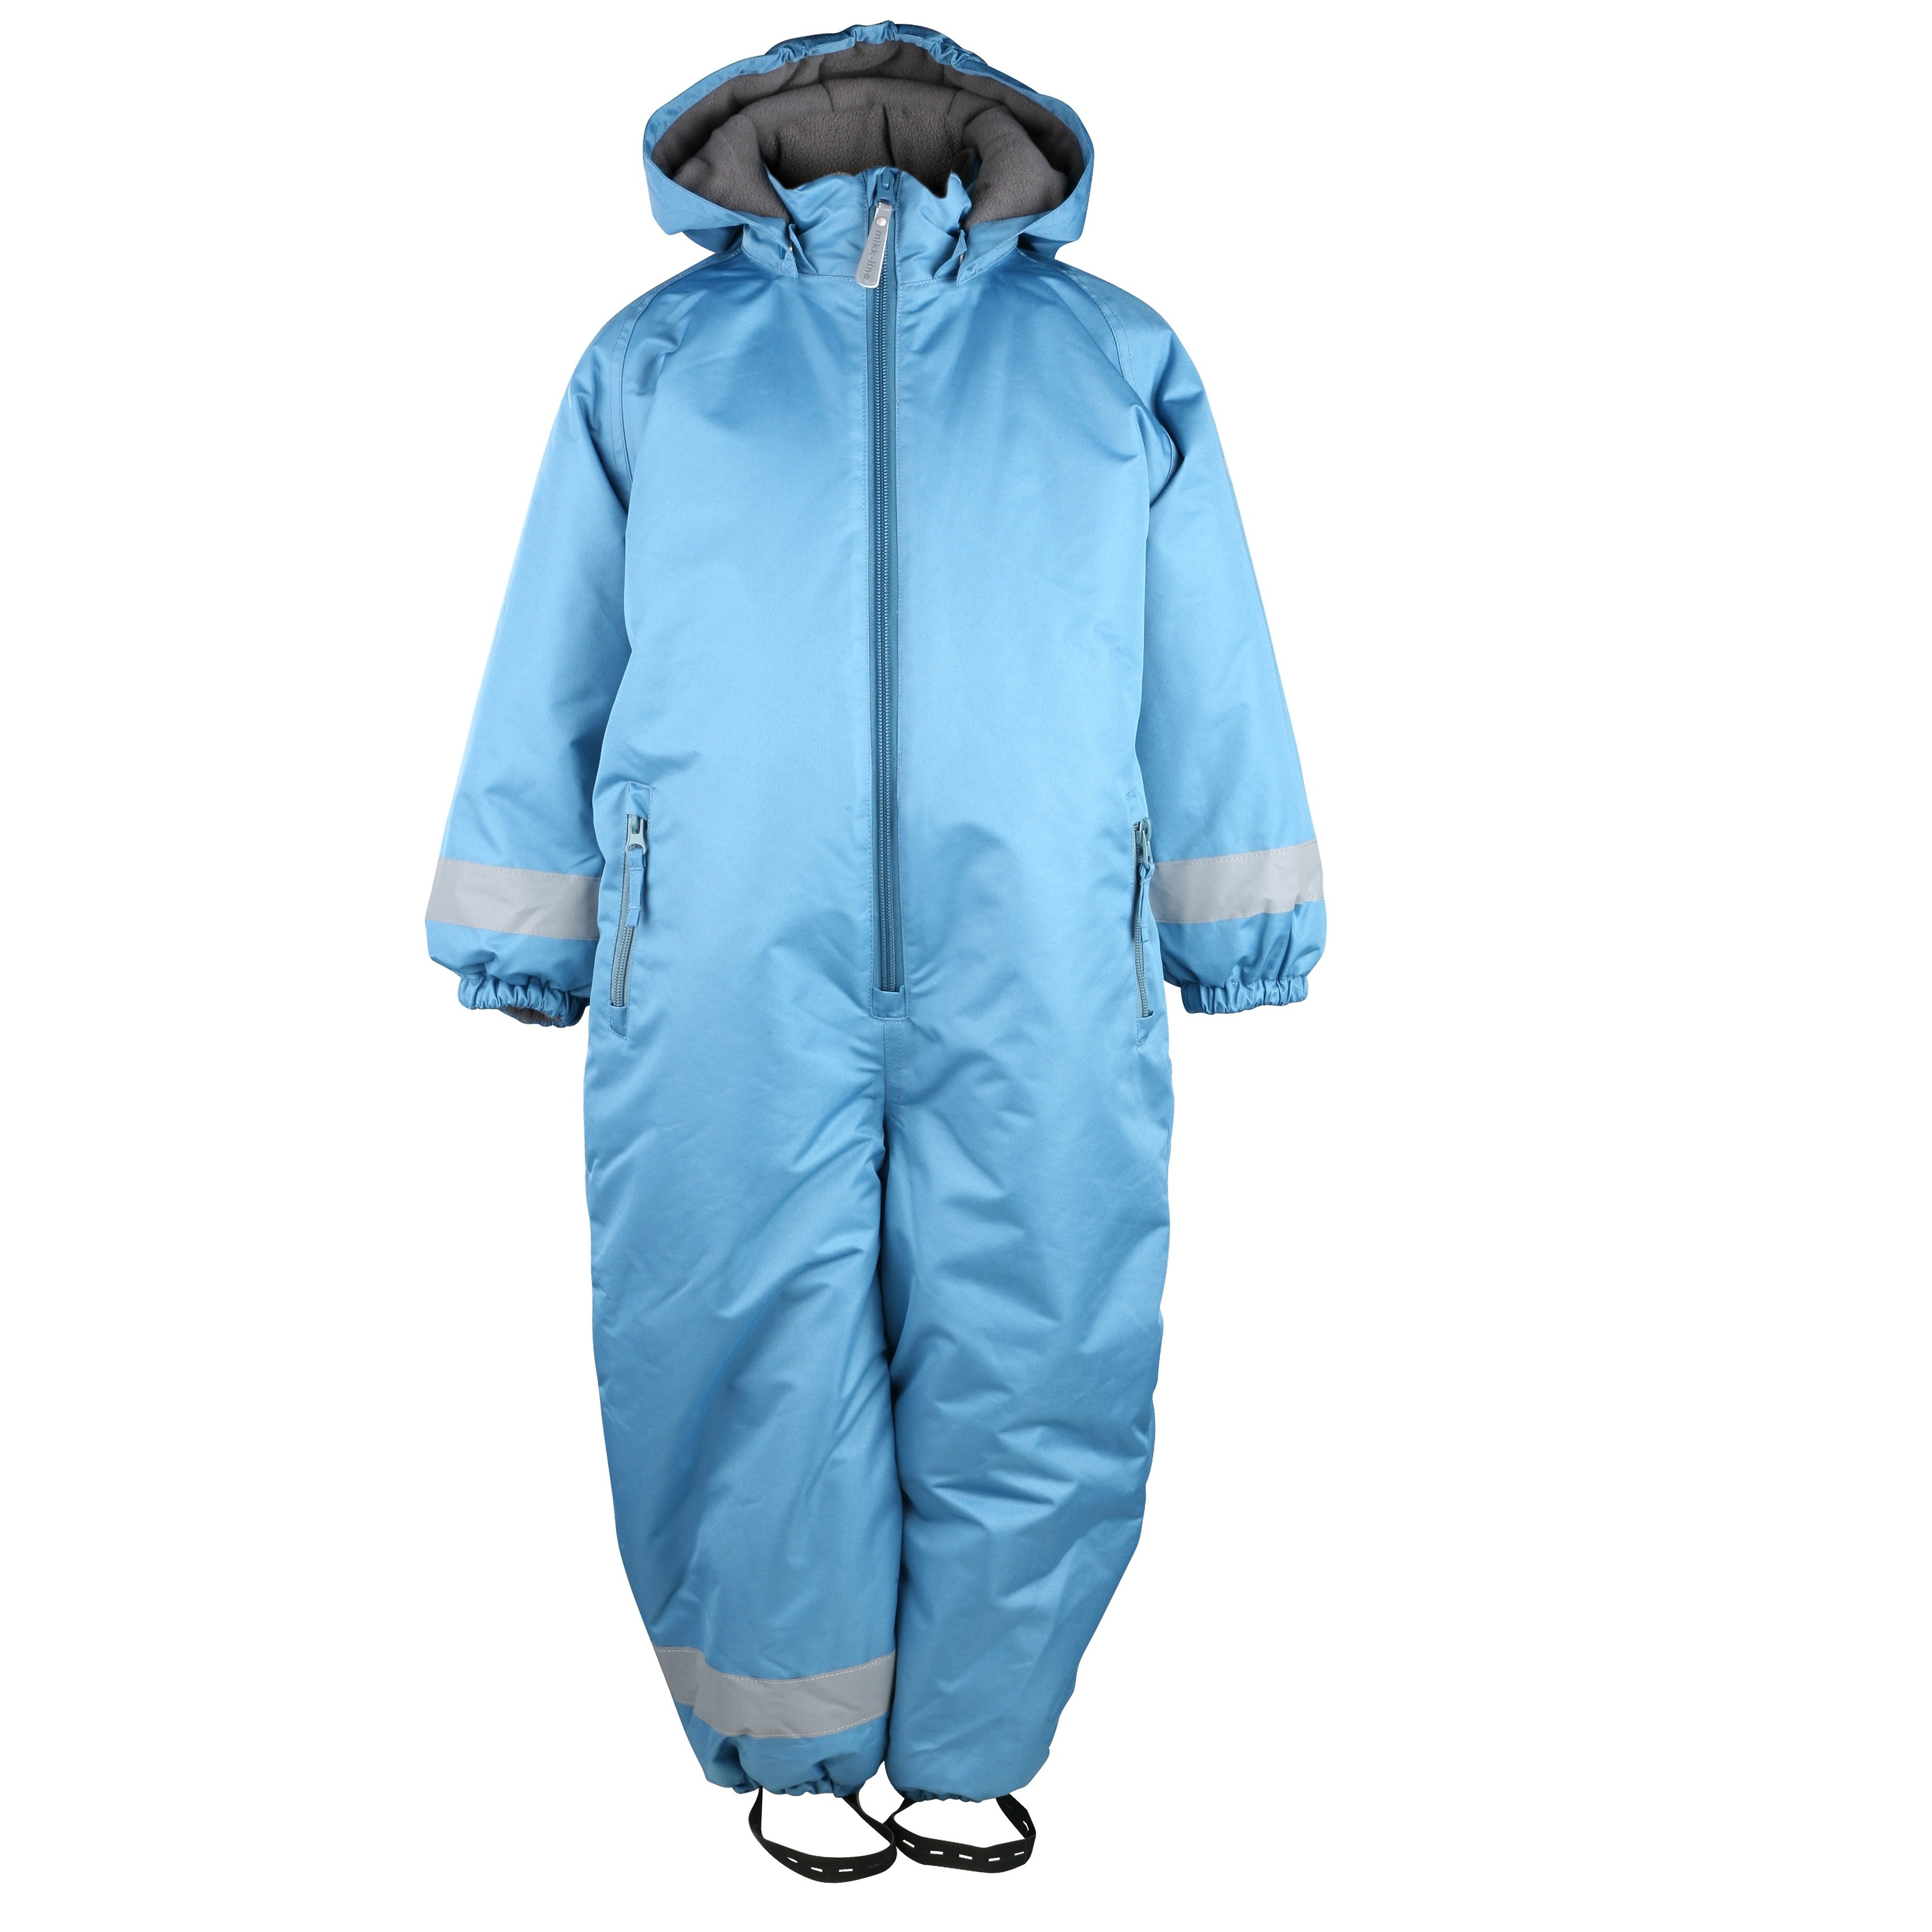 Buy Mikk-line - Snowsuit